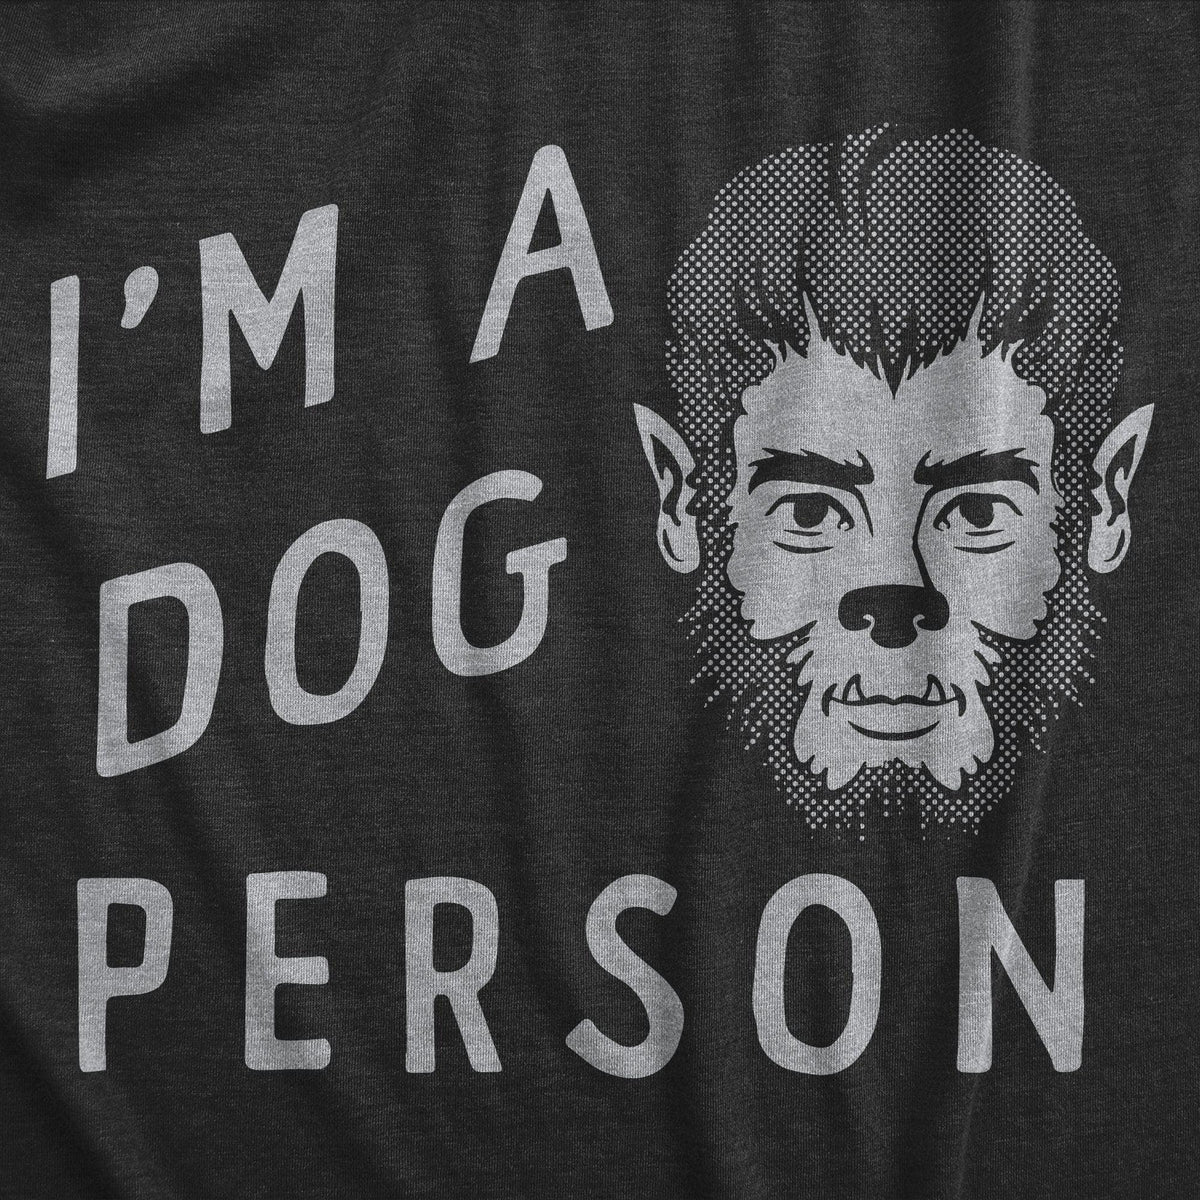 Im A Dog Person Women&#39;s Tshirt  -  Crazy Dog T-Shirts